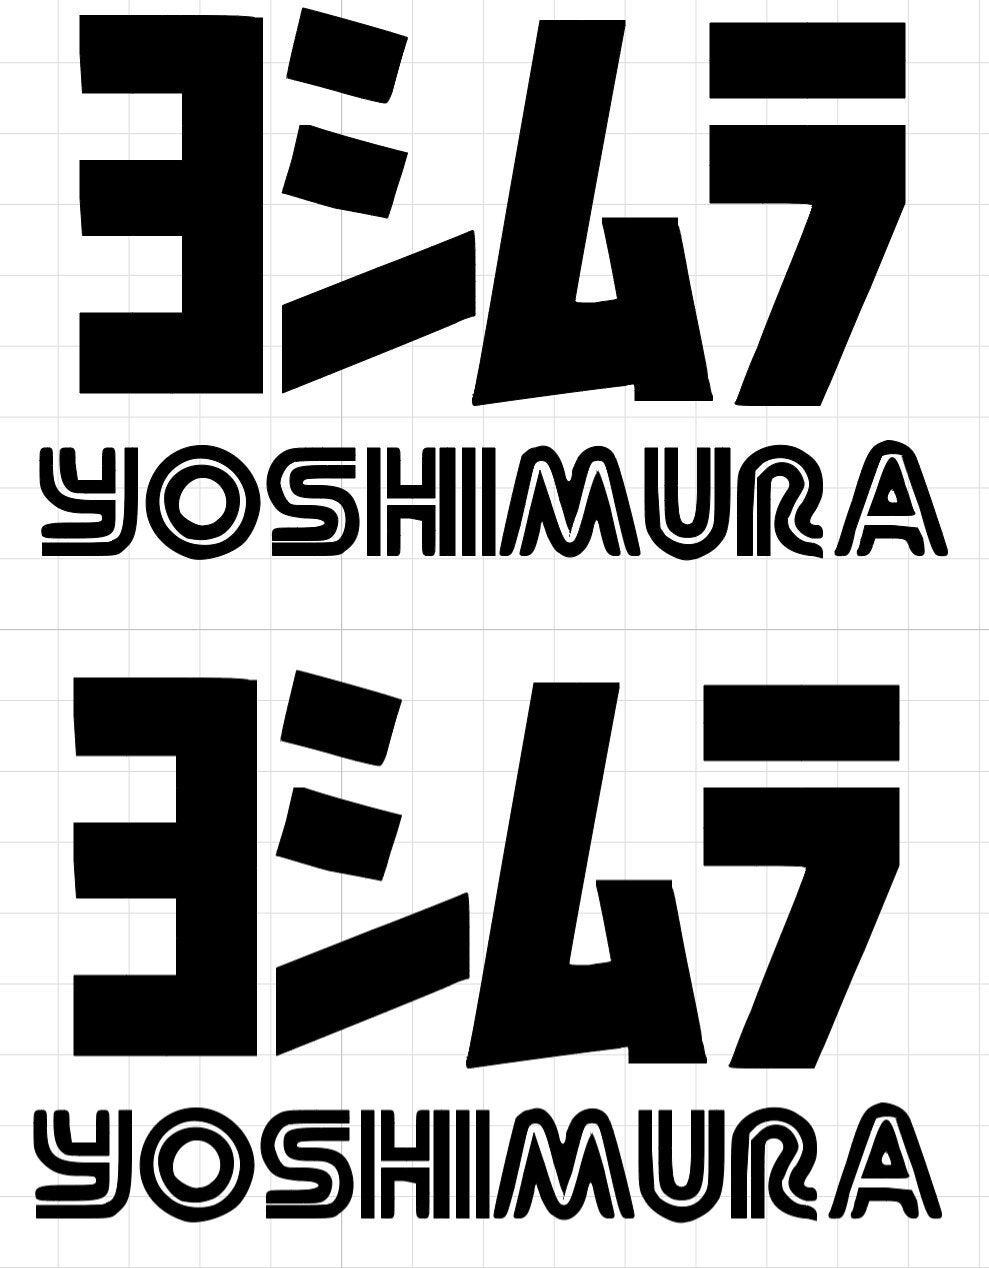 Yoshimura stickers -  Schweiz